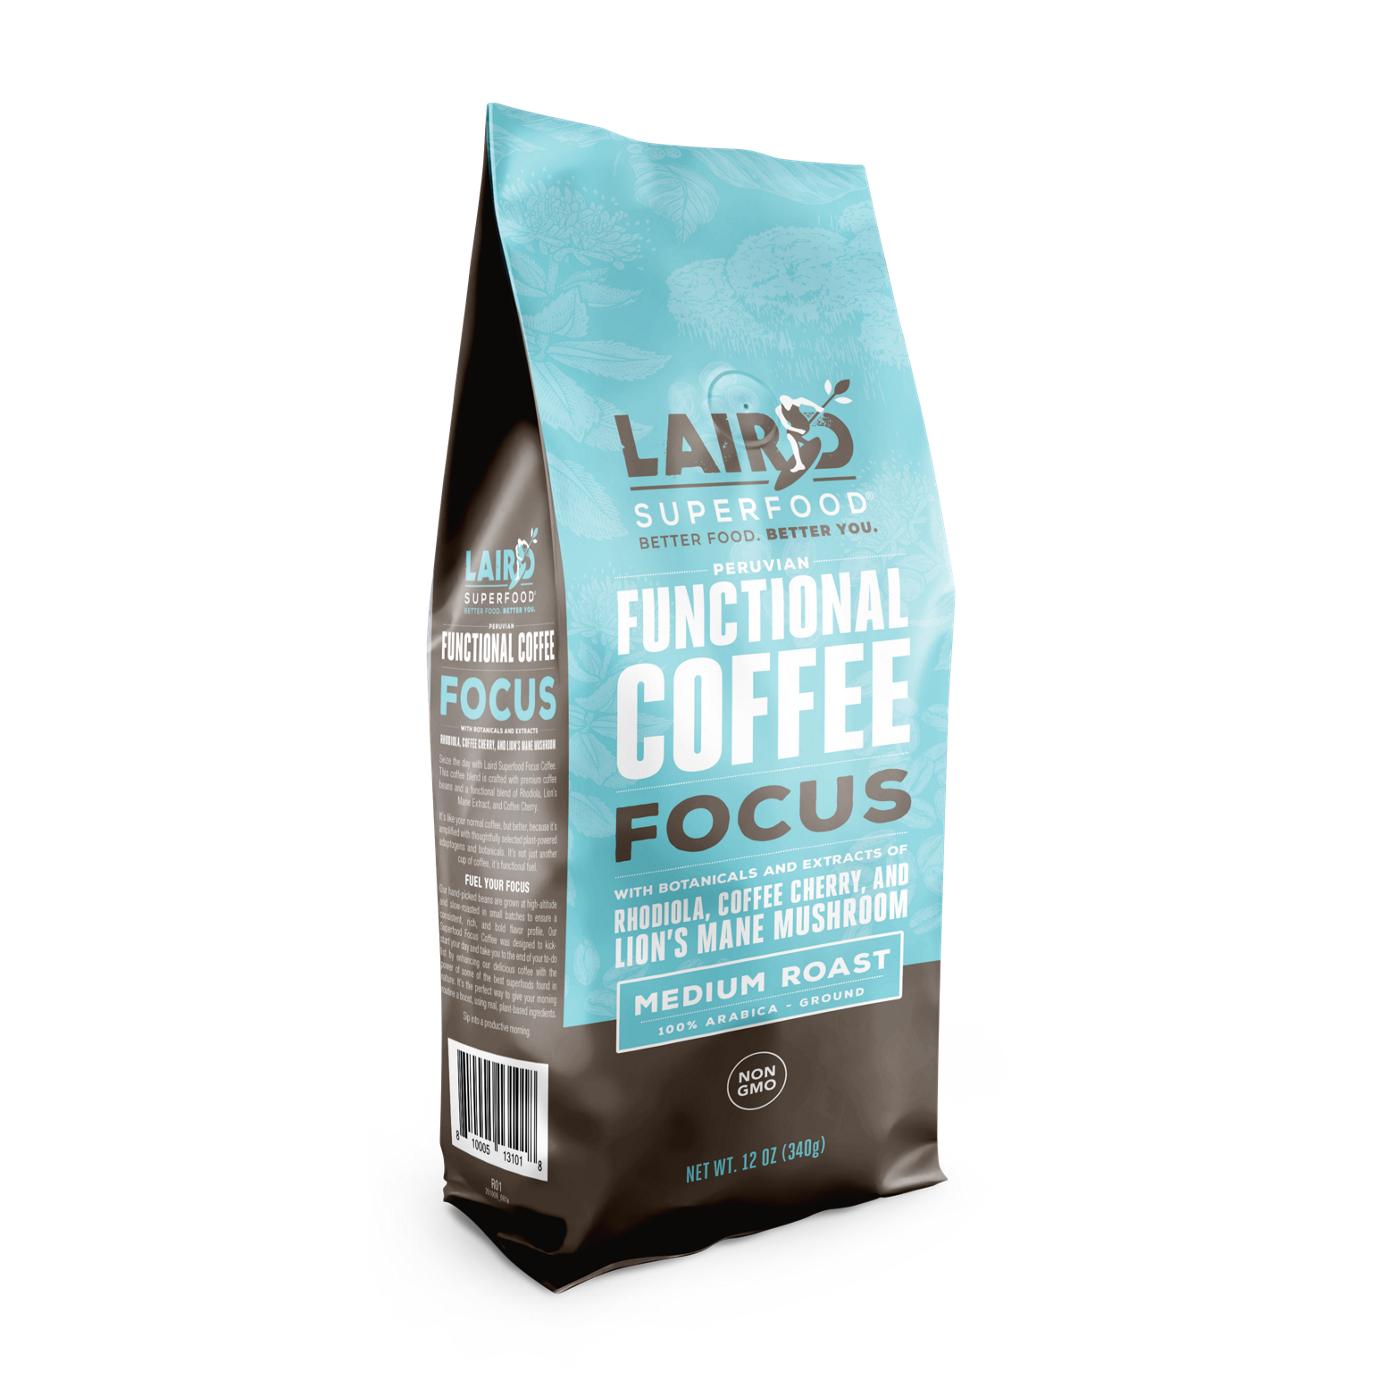 Laird Superfood Functional Coffee Focus Medium Roast Ground Coffee; image 1 of 2